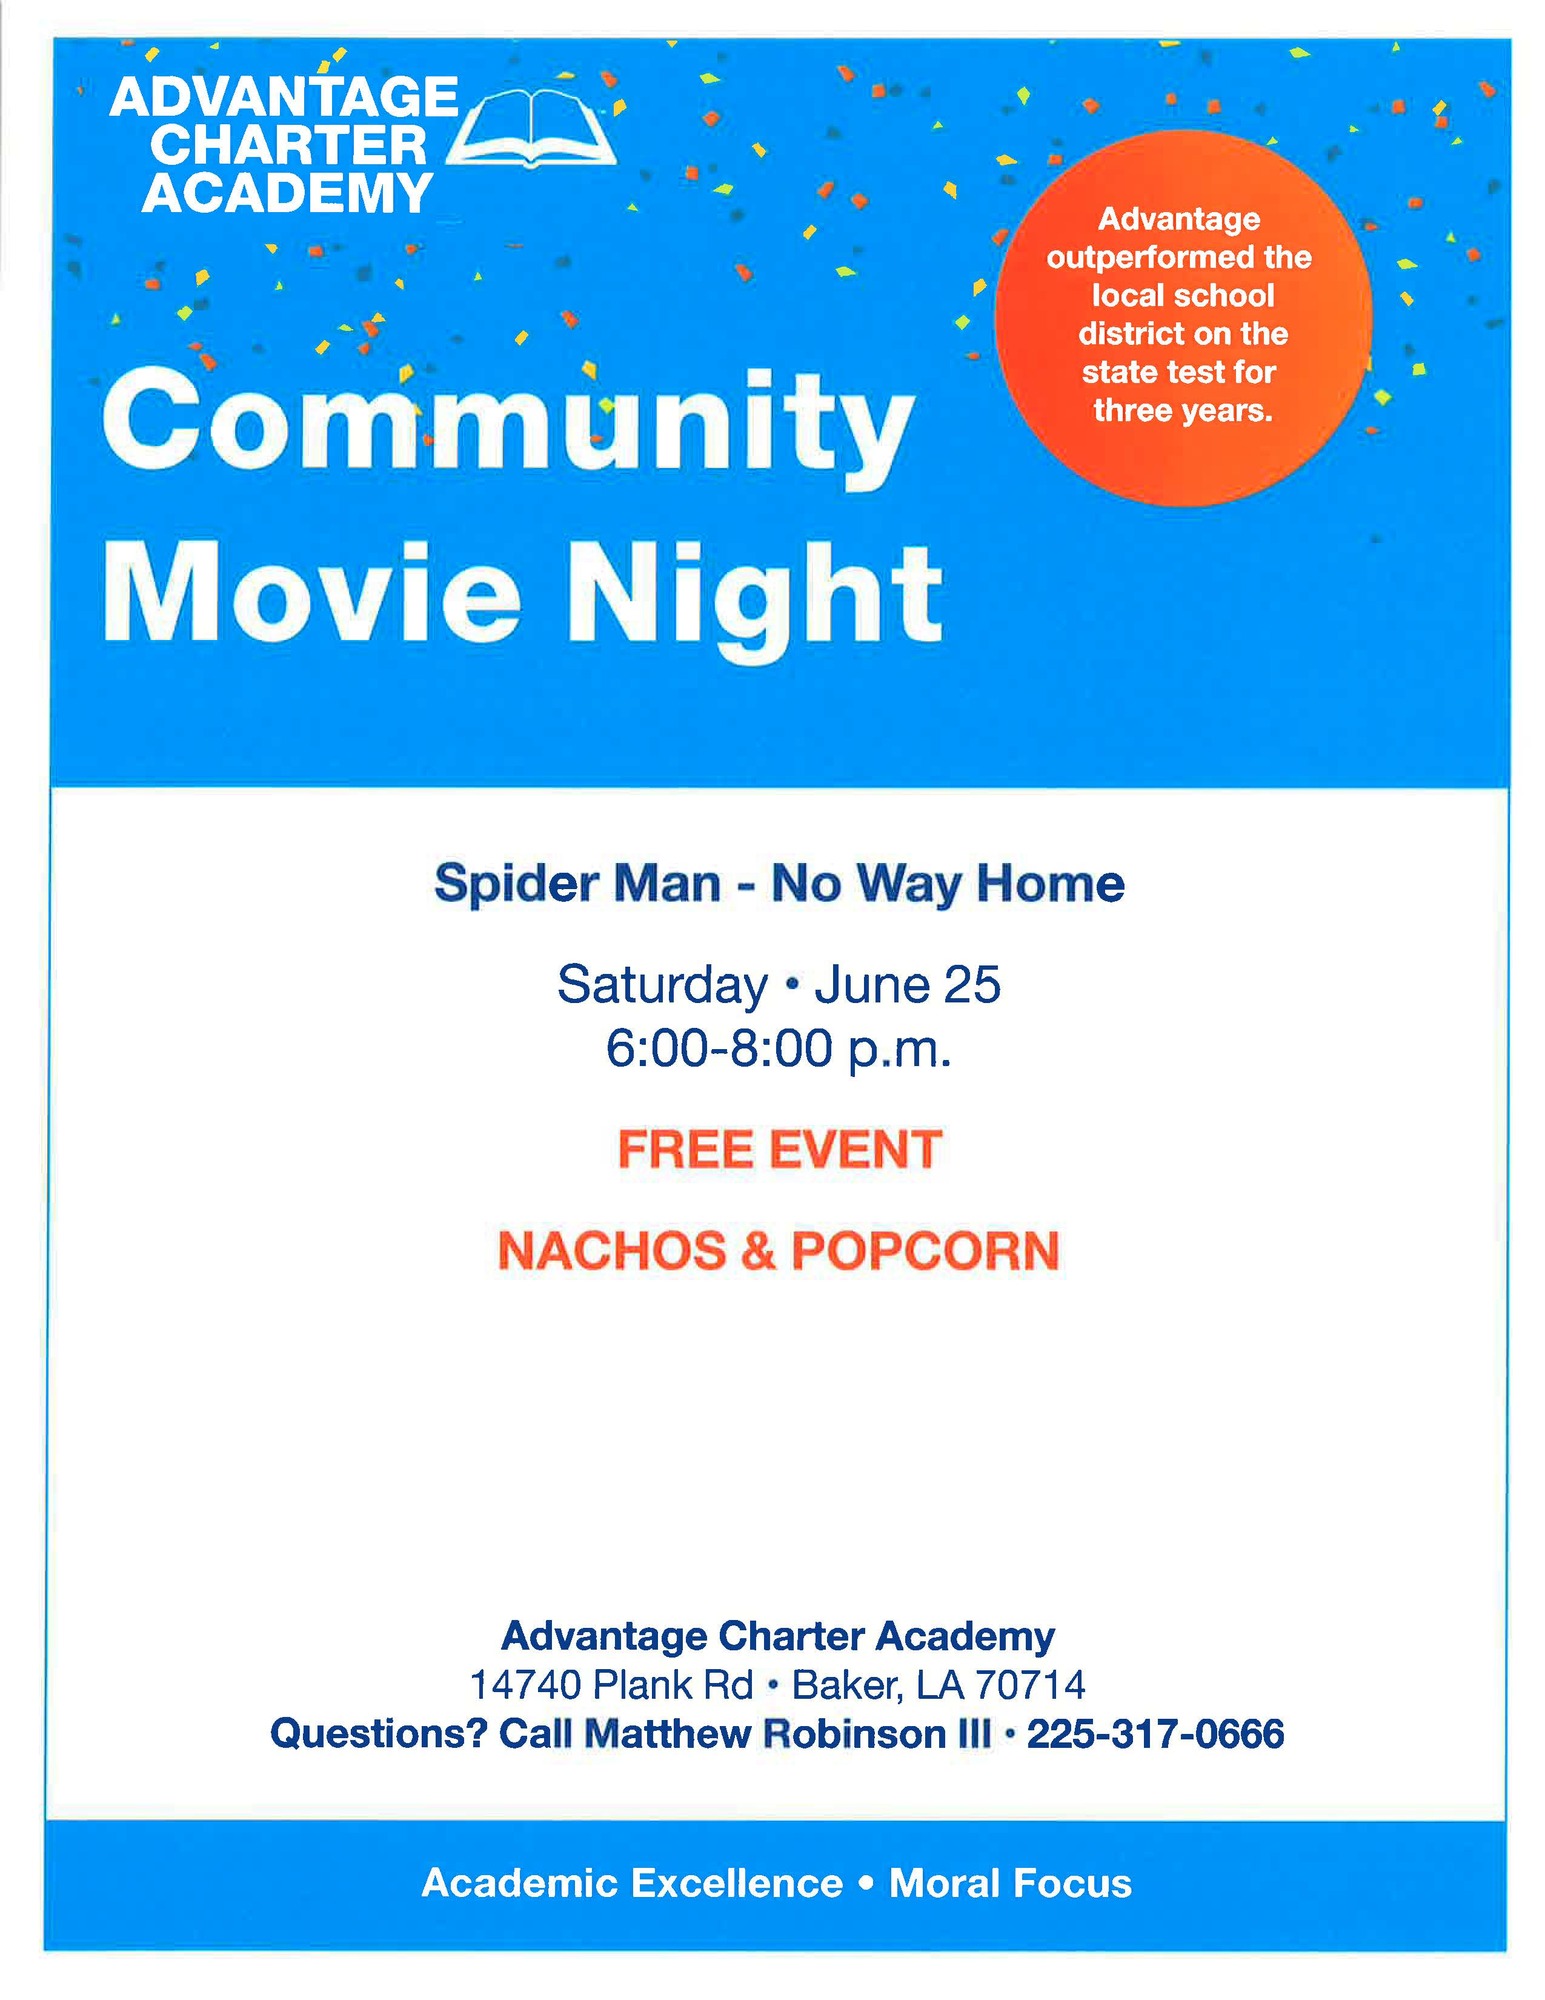 Advantage Charter Academy's Community Movie Night, June 25, 2022